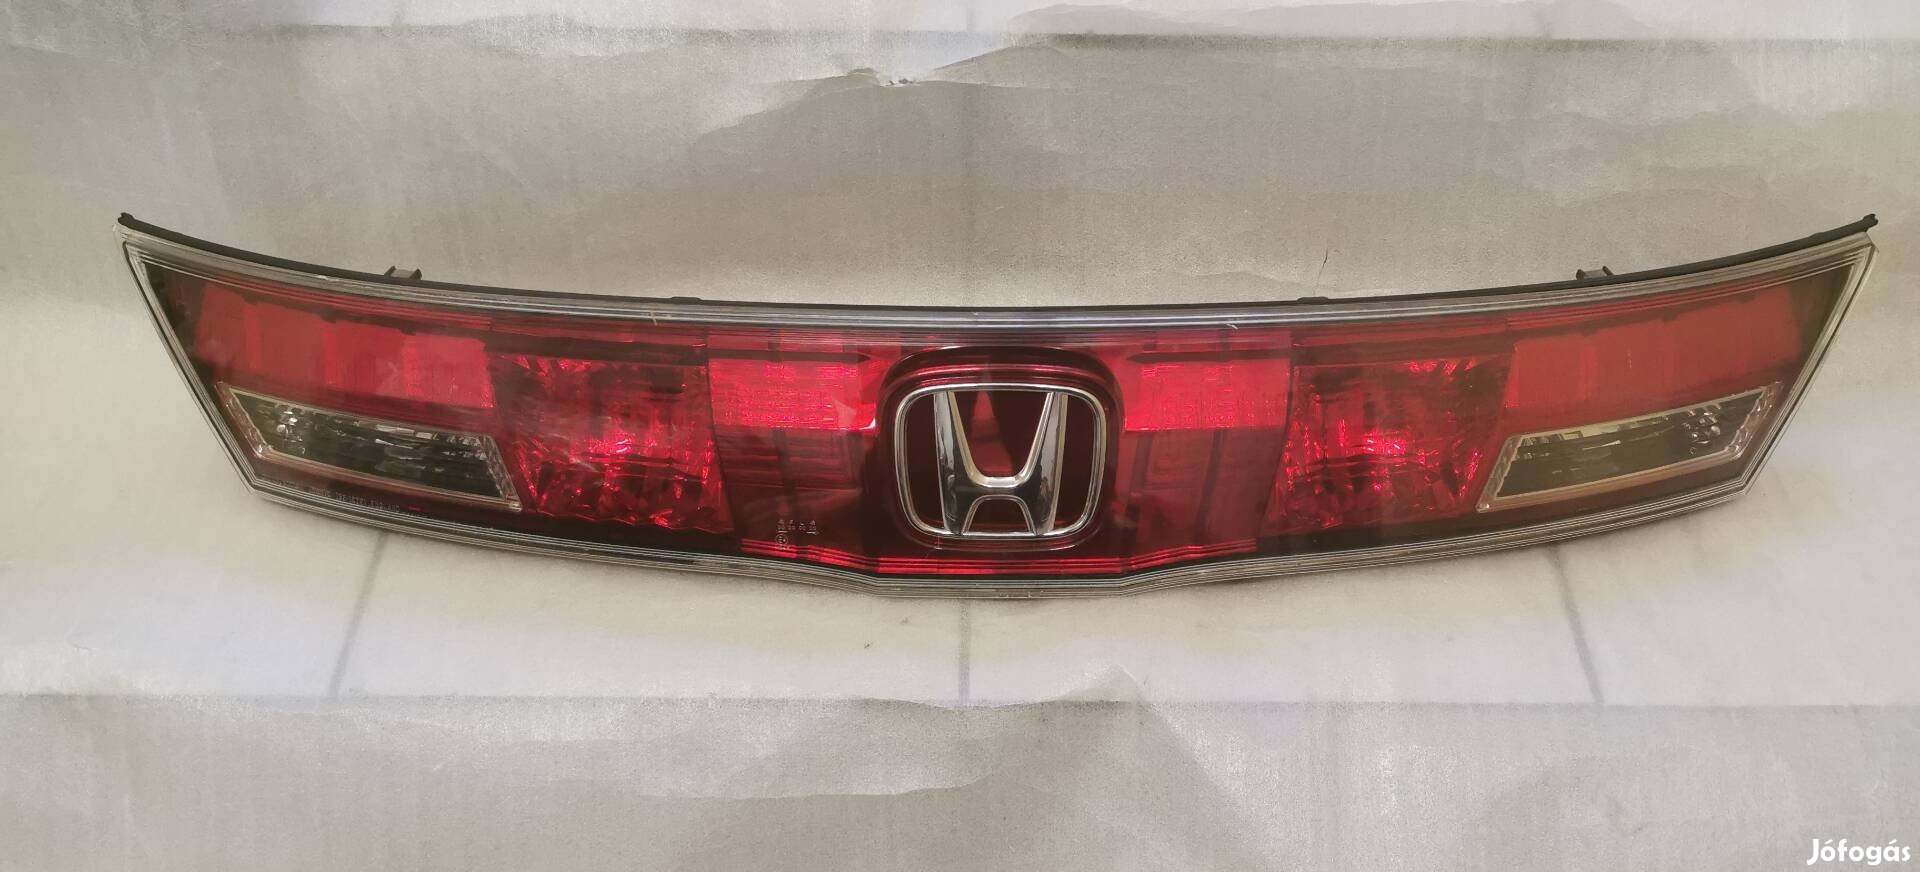 Honda ufo civic hatsó lámpa plexi 2006-2012 